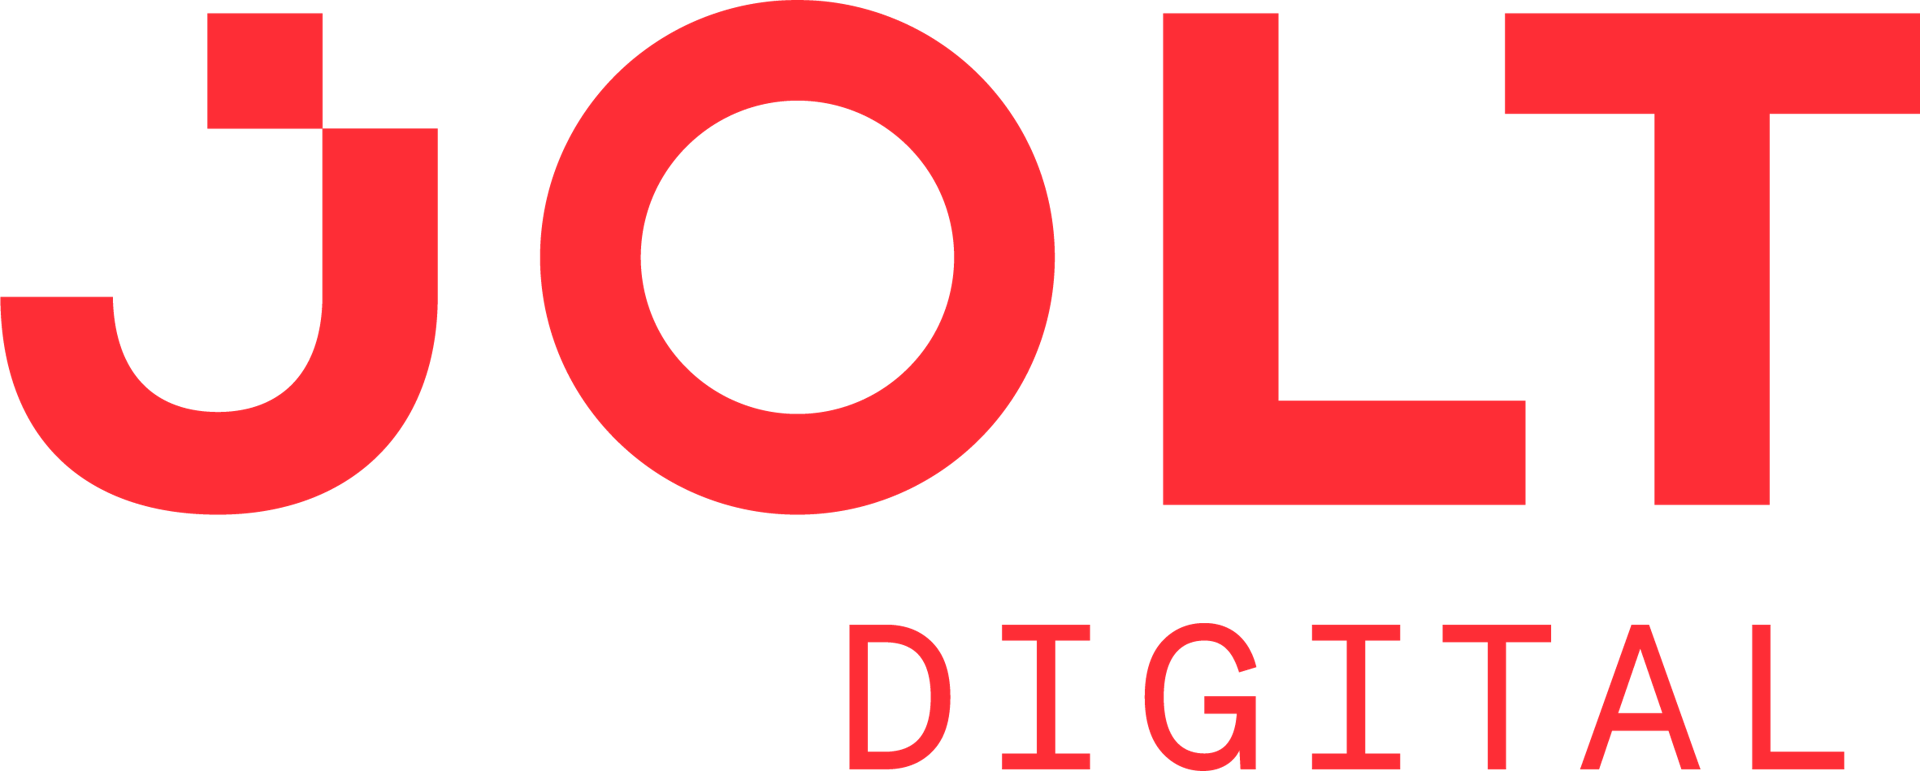 Jolt_Digital_Primary_Logo_Red_8c8b567575